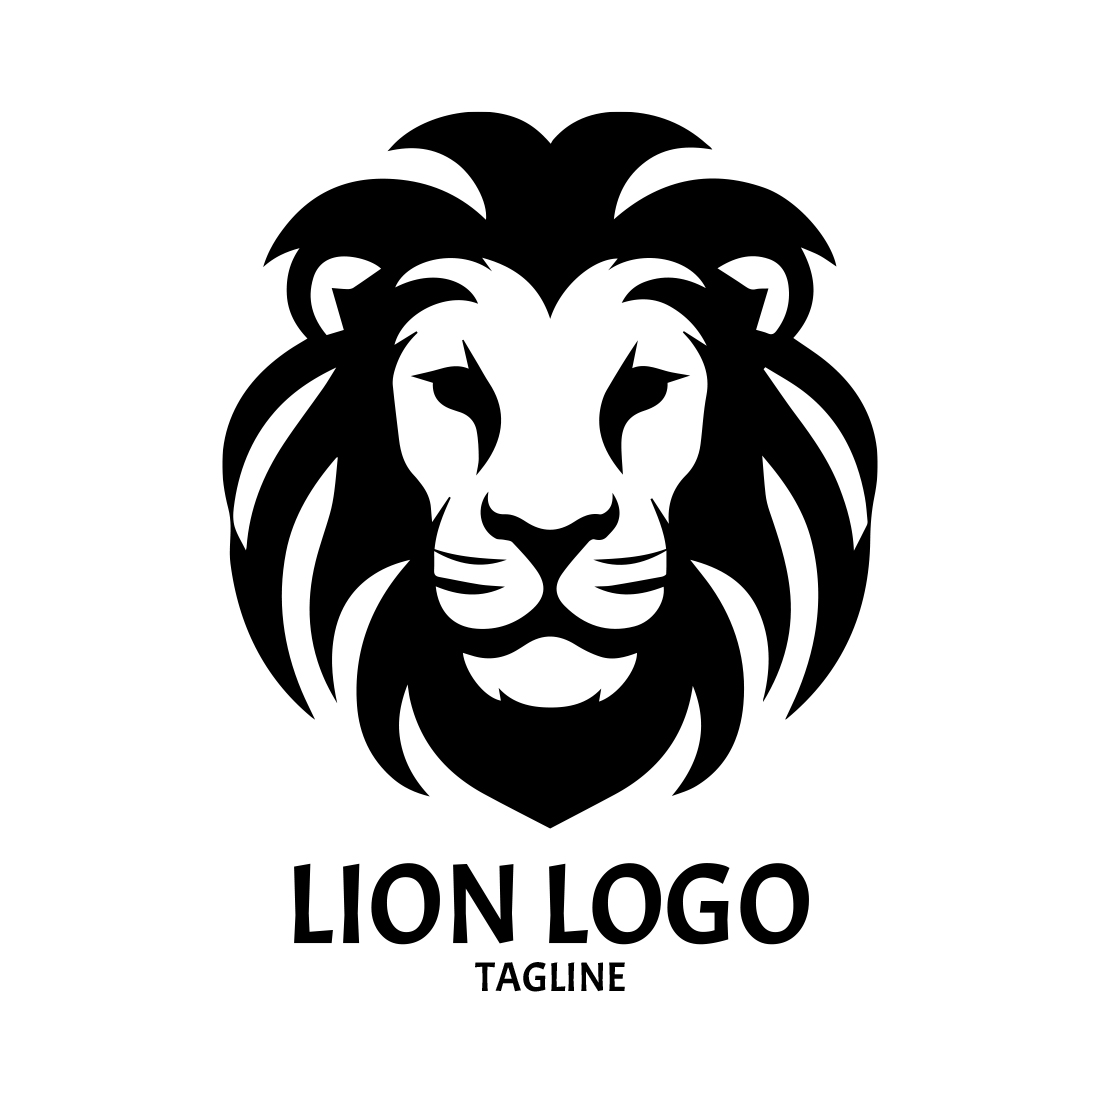 lion logo jpg file 476